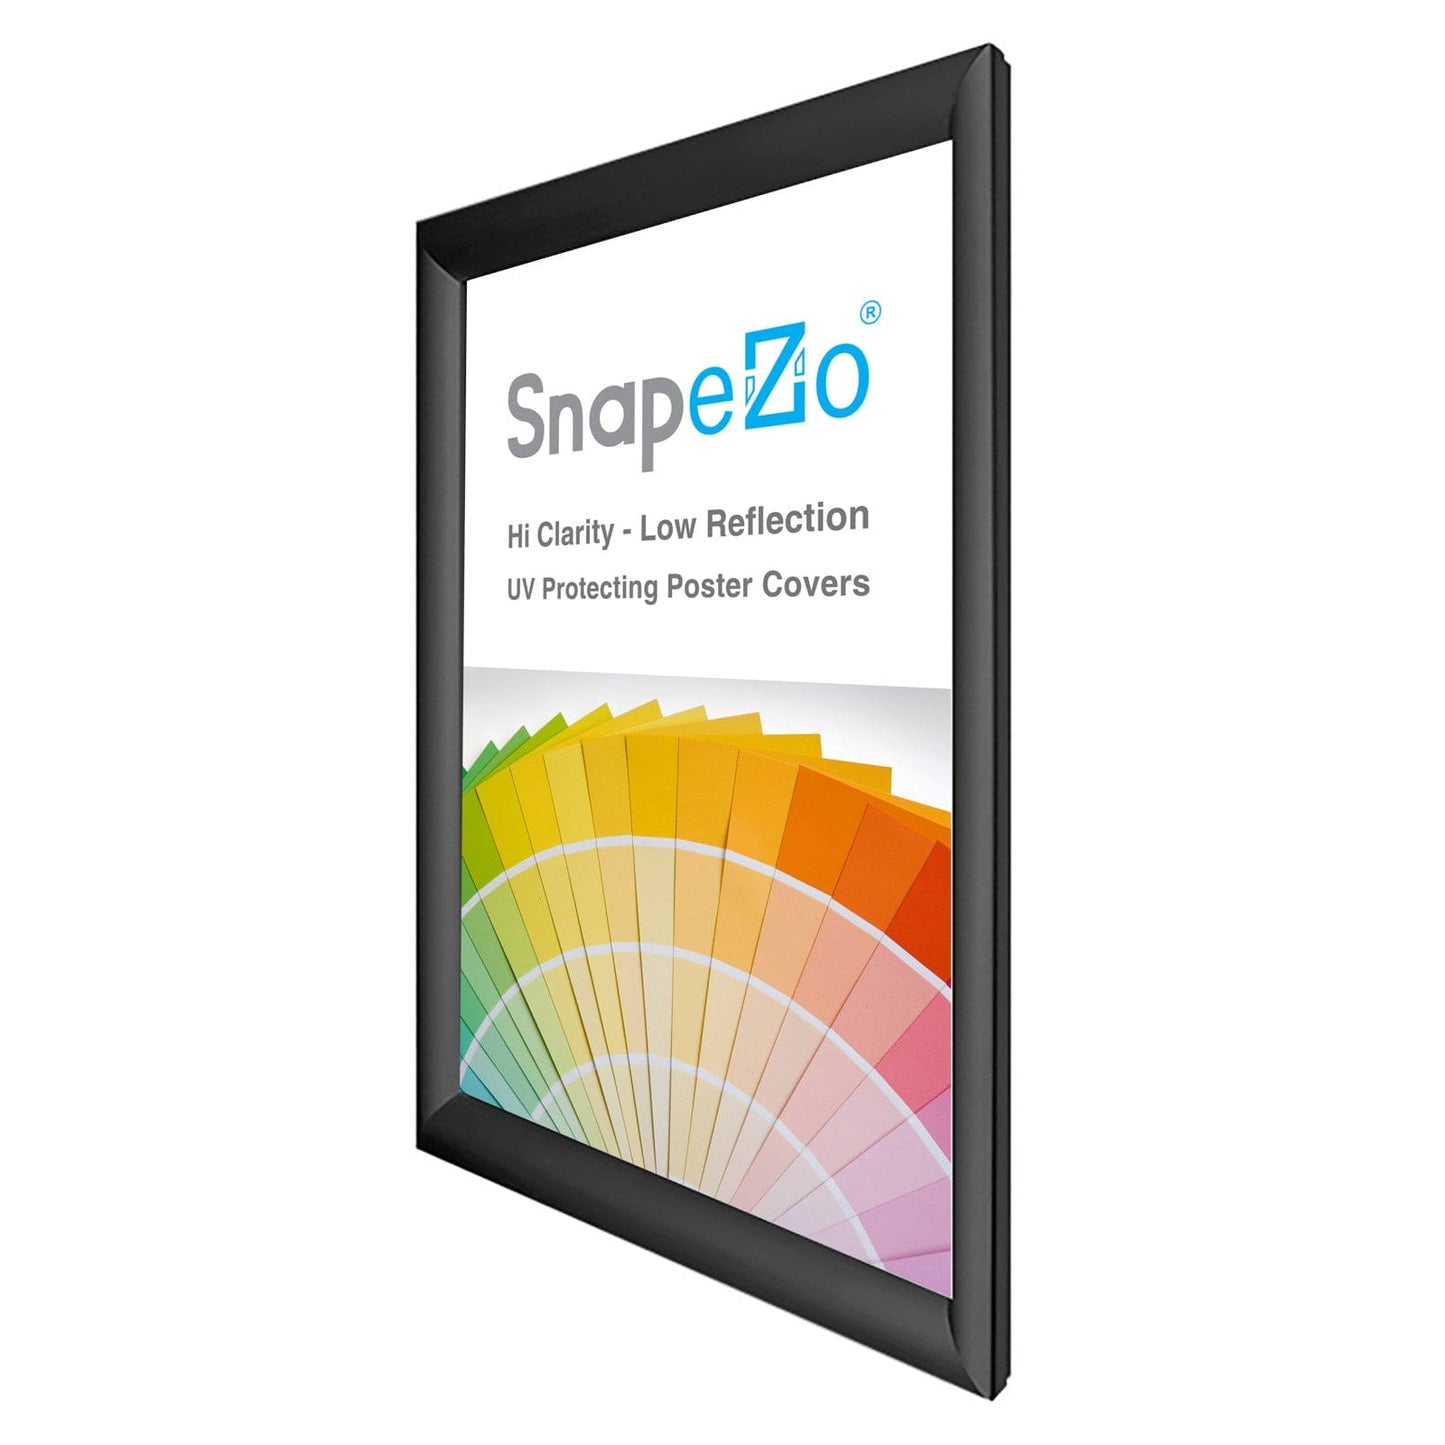 21x34 Black SnapeZo® Snap Frame - 1.2" Profile - Snap Frames Direct